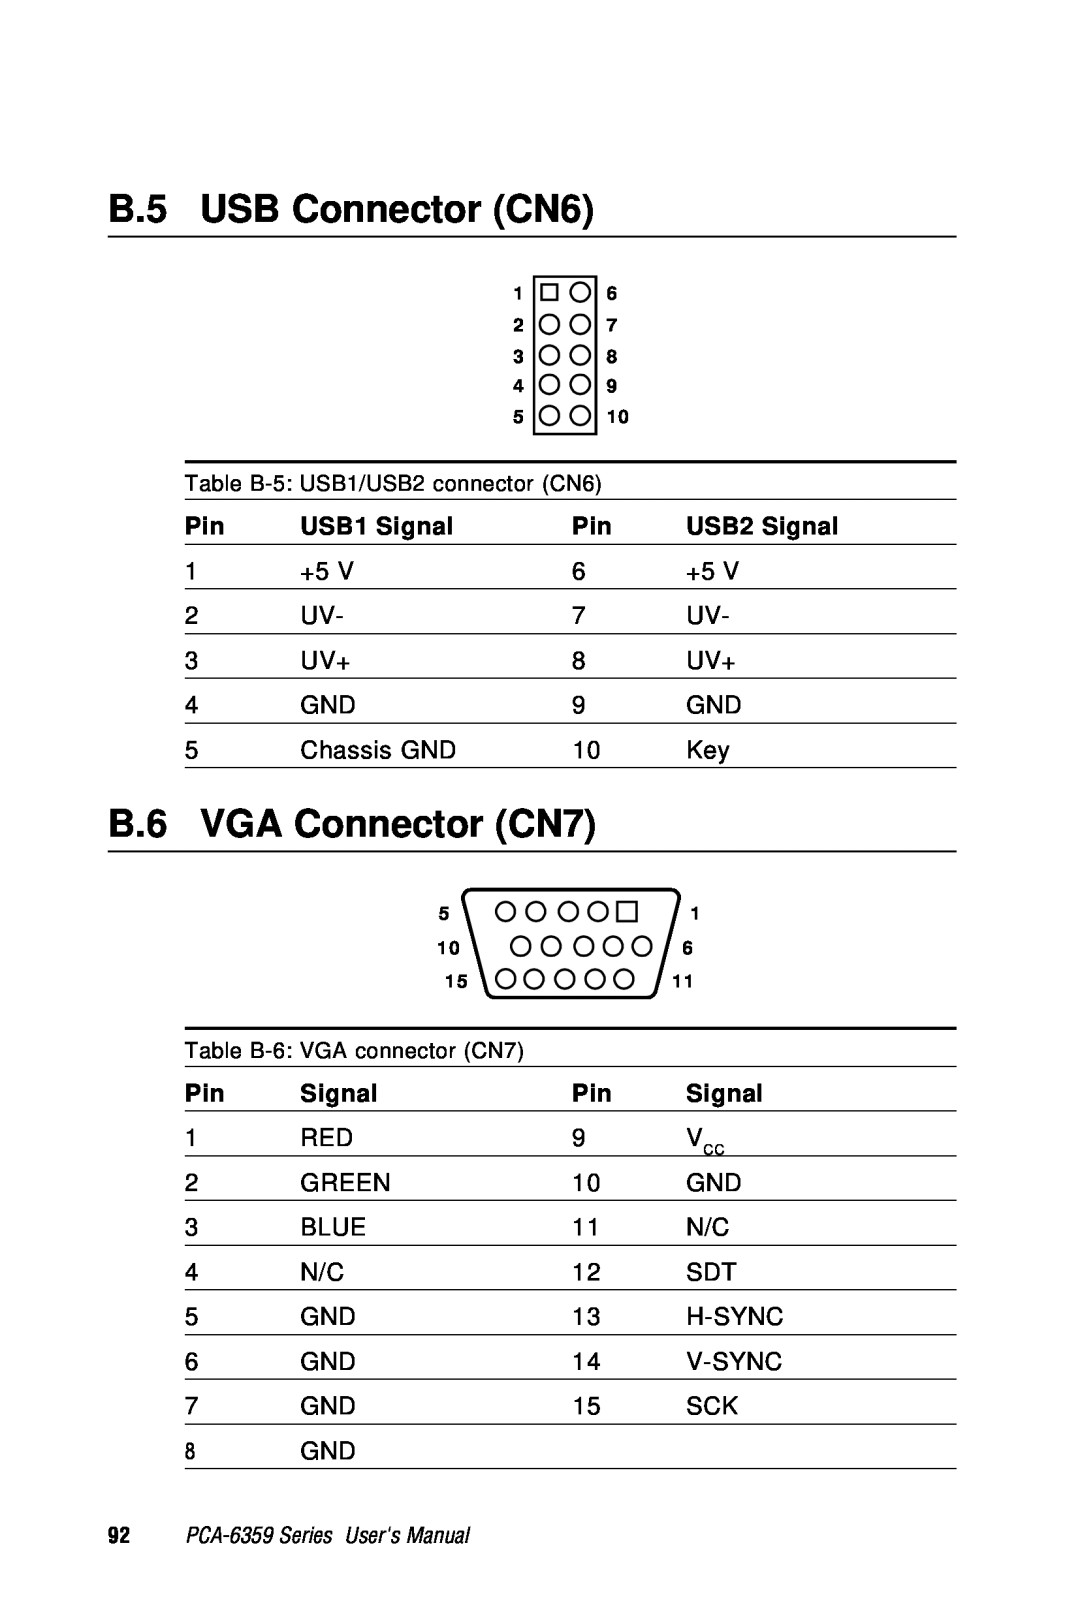 Advantech PCA-6359 user manual B.5 USB Connector CN6, B.6 VGA Connector CN7, Table B-5 USB1/USB2 connector CN6 